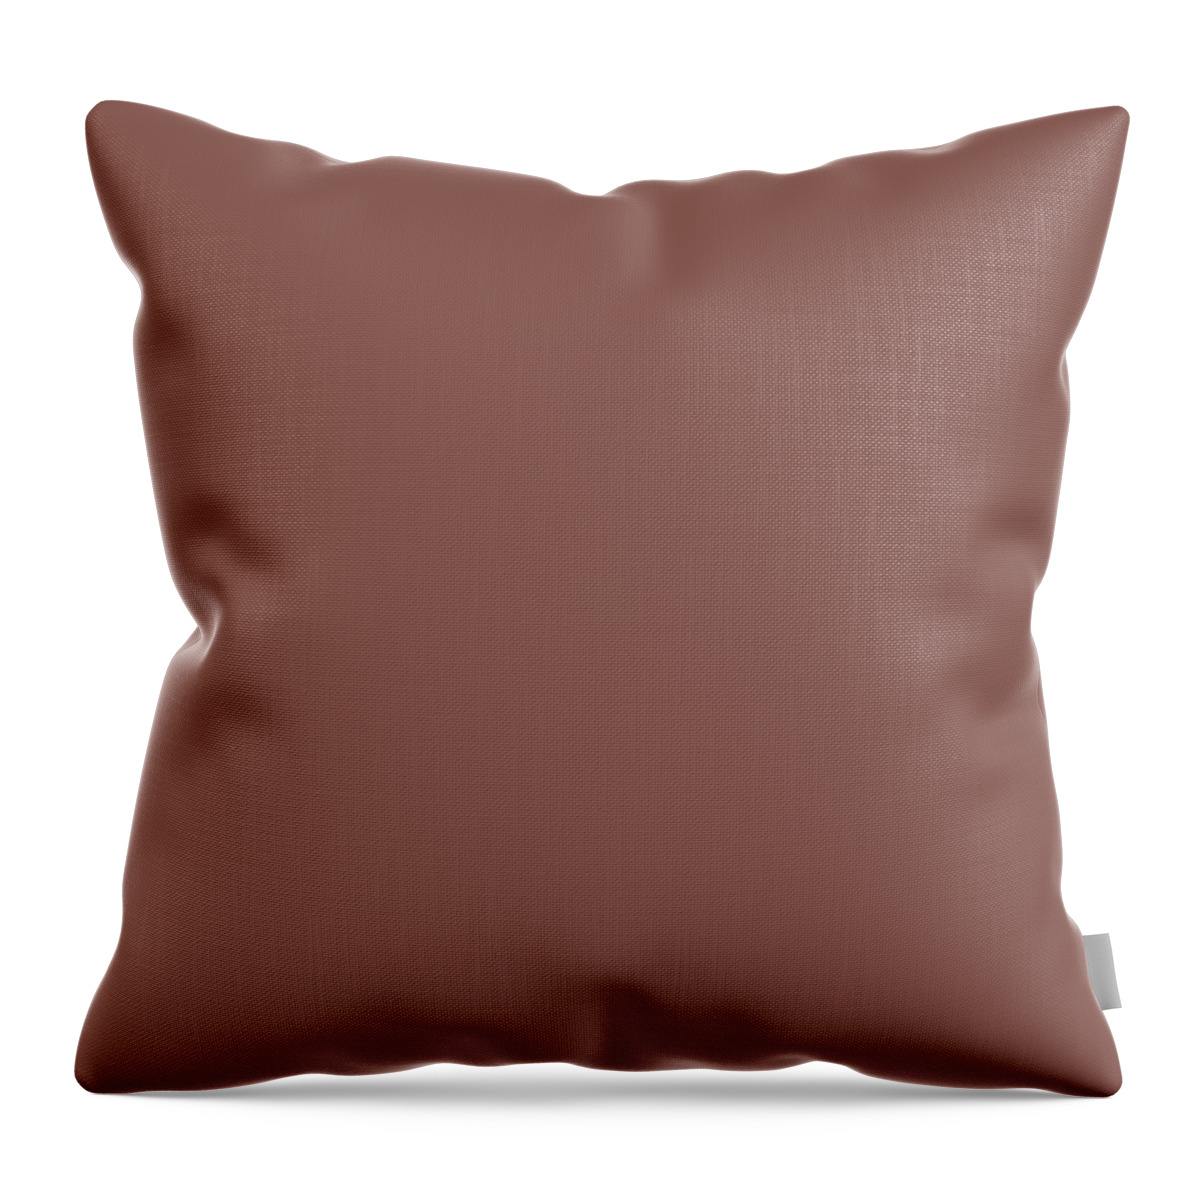 Raspberry Truffle Throw Pillow featuring the digital art Raspberry Truffle by TintoDesigns